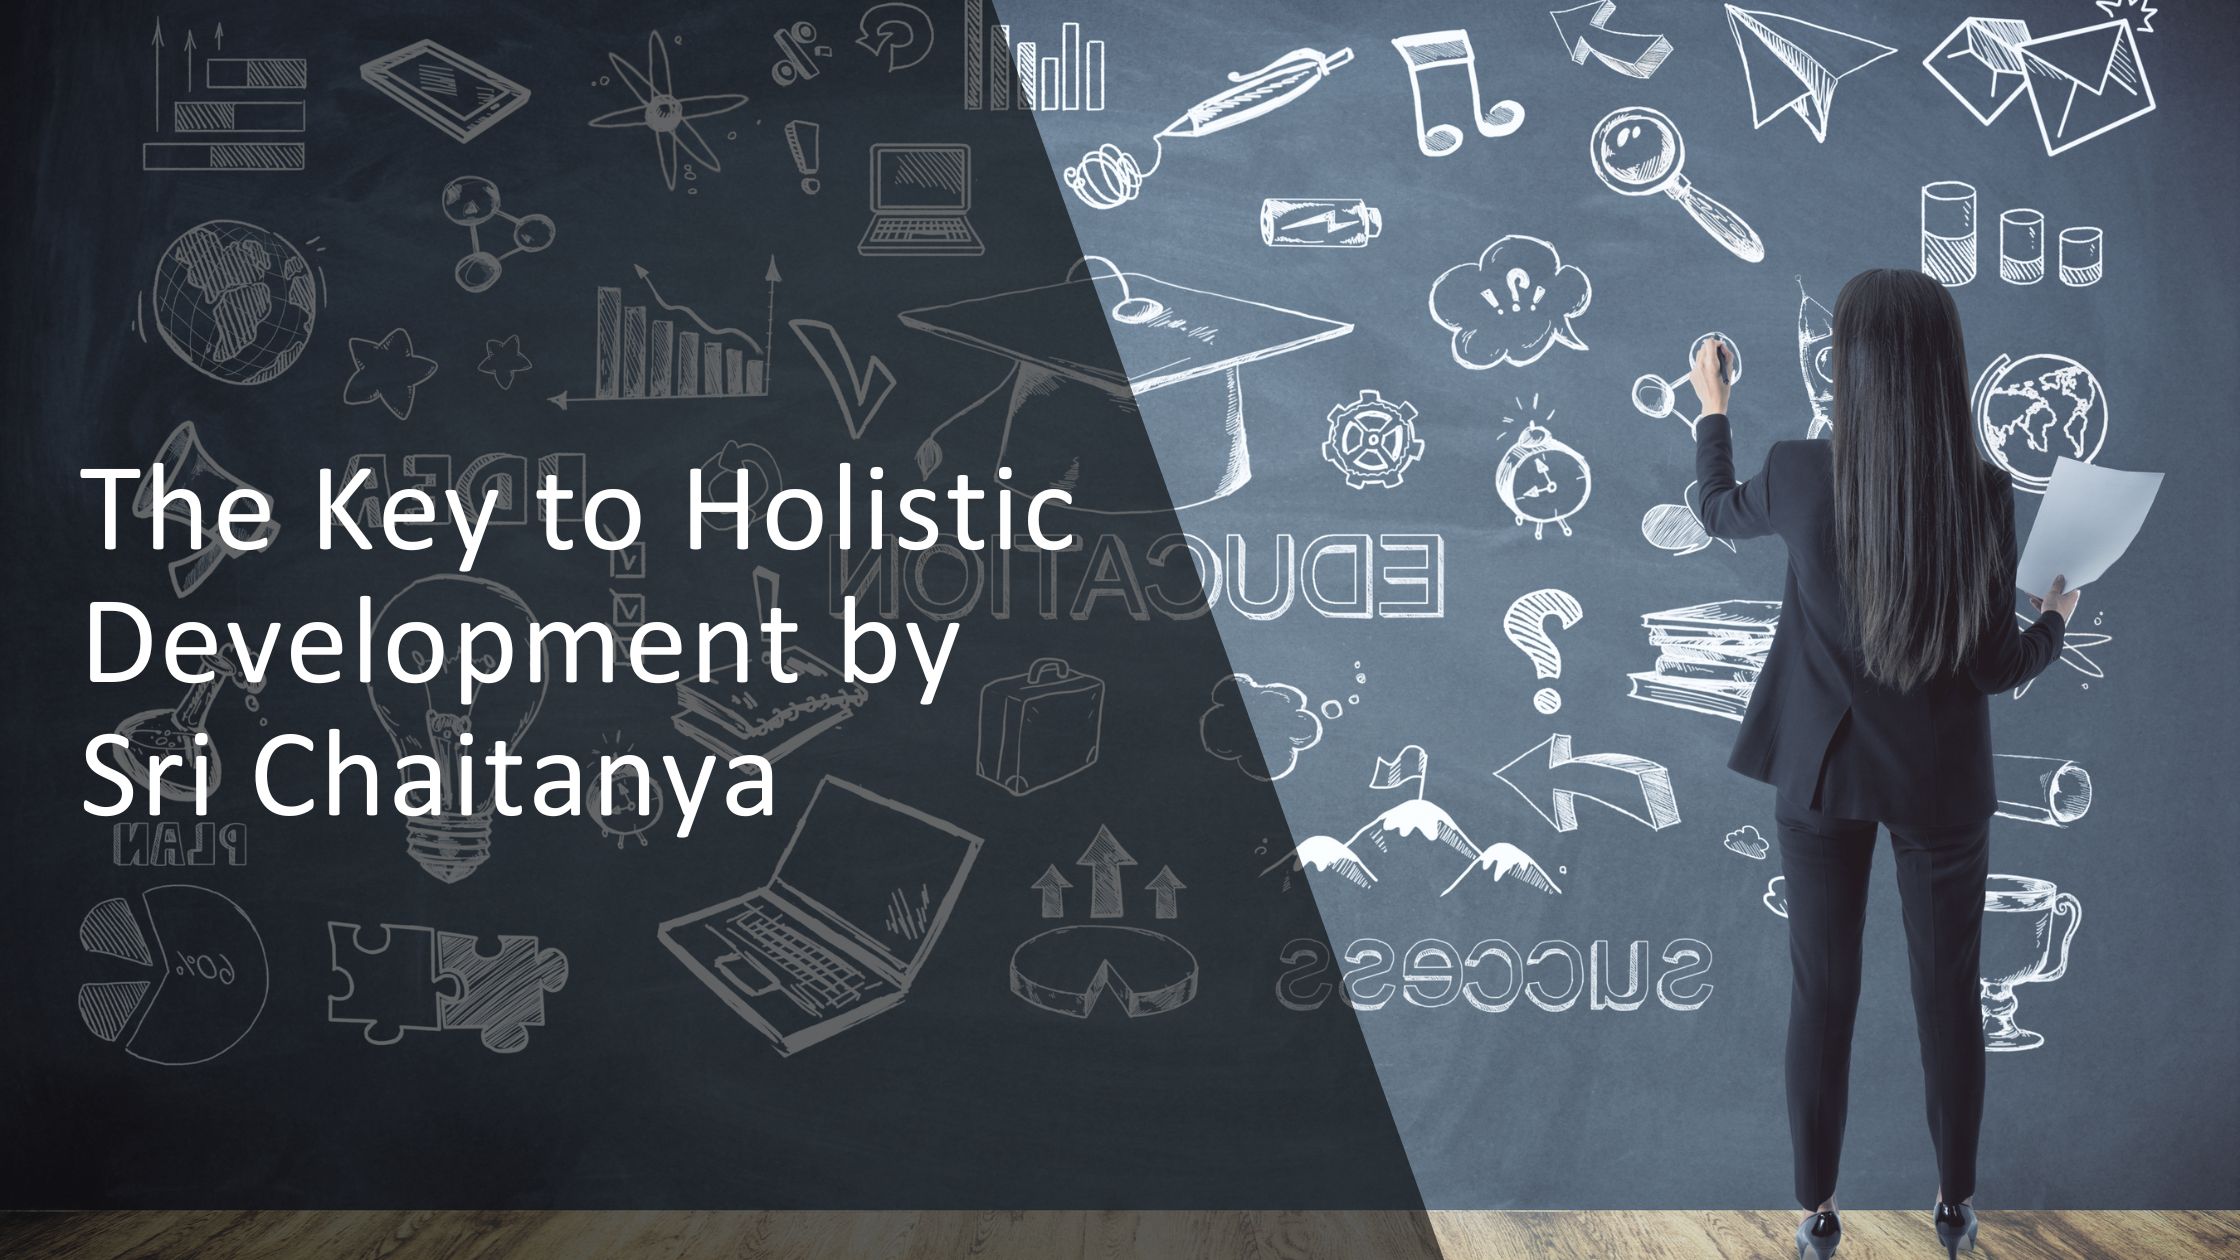 The Key to Holistic Development by Sri Chaitanya